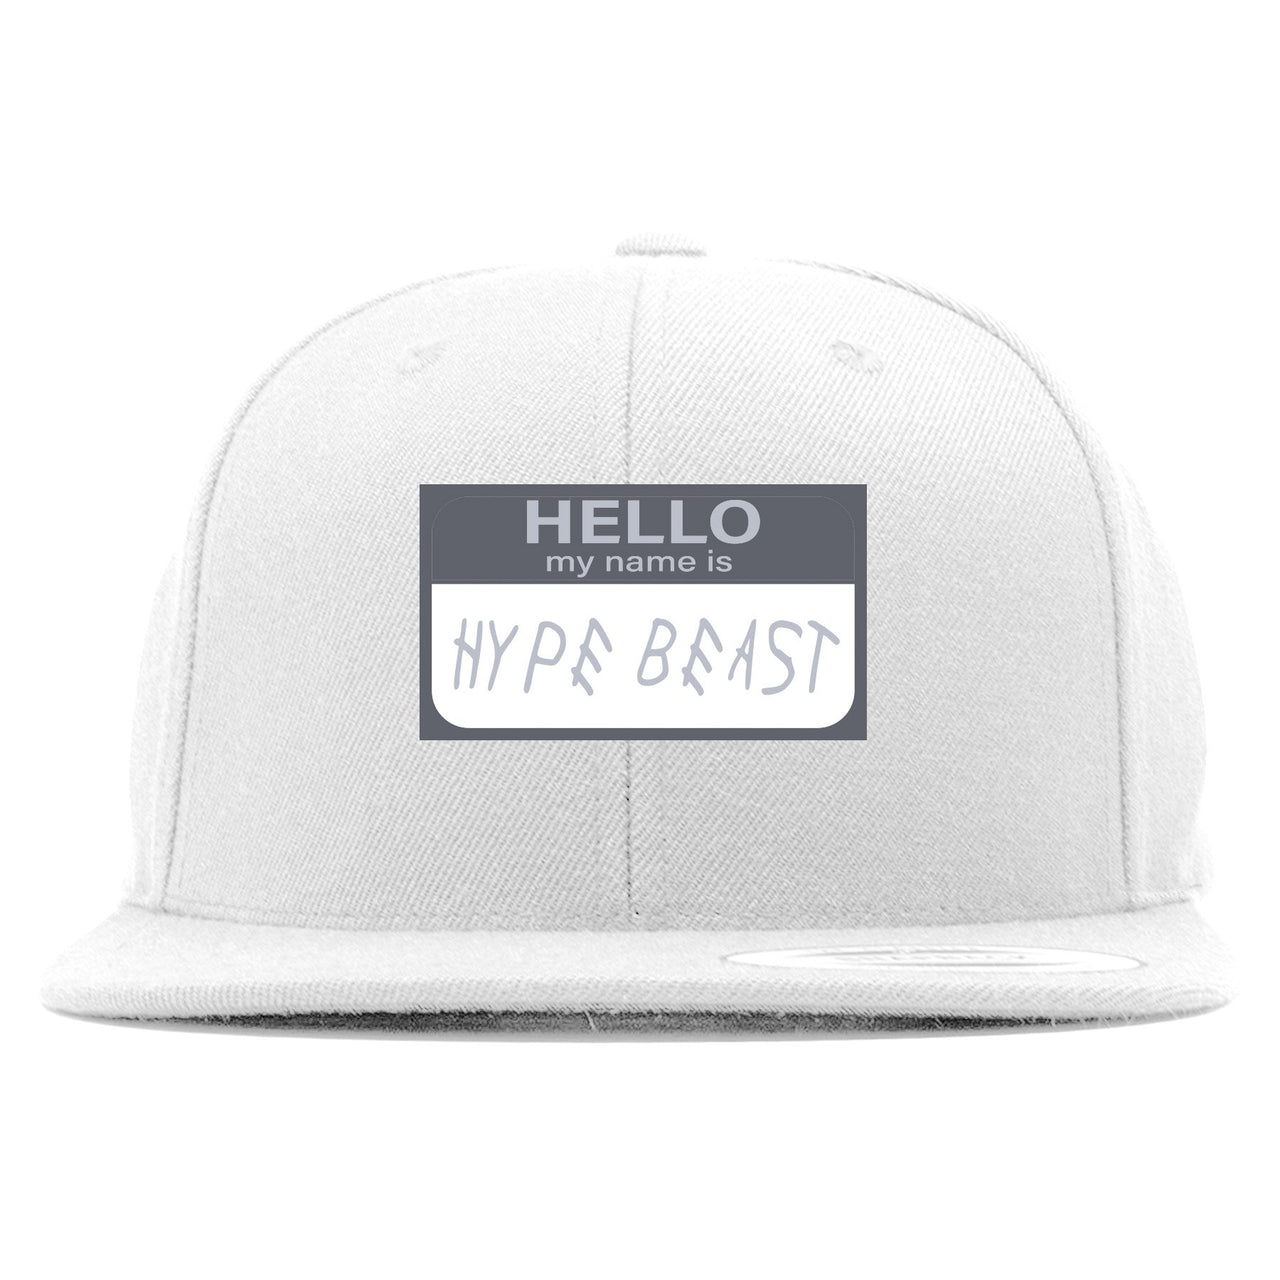 Analog 700s Snapback | Hello My Name Is Hype Beast Woe, White